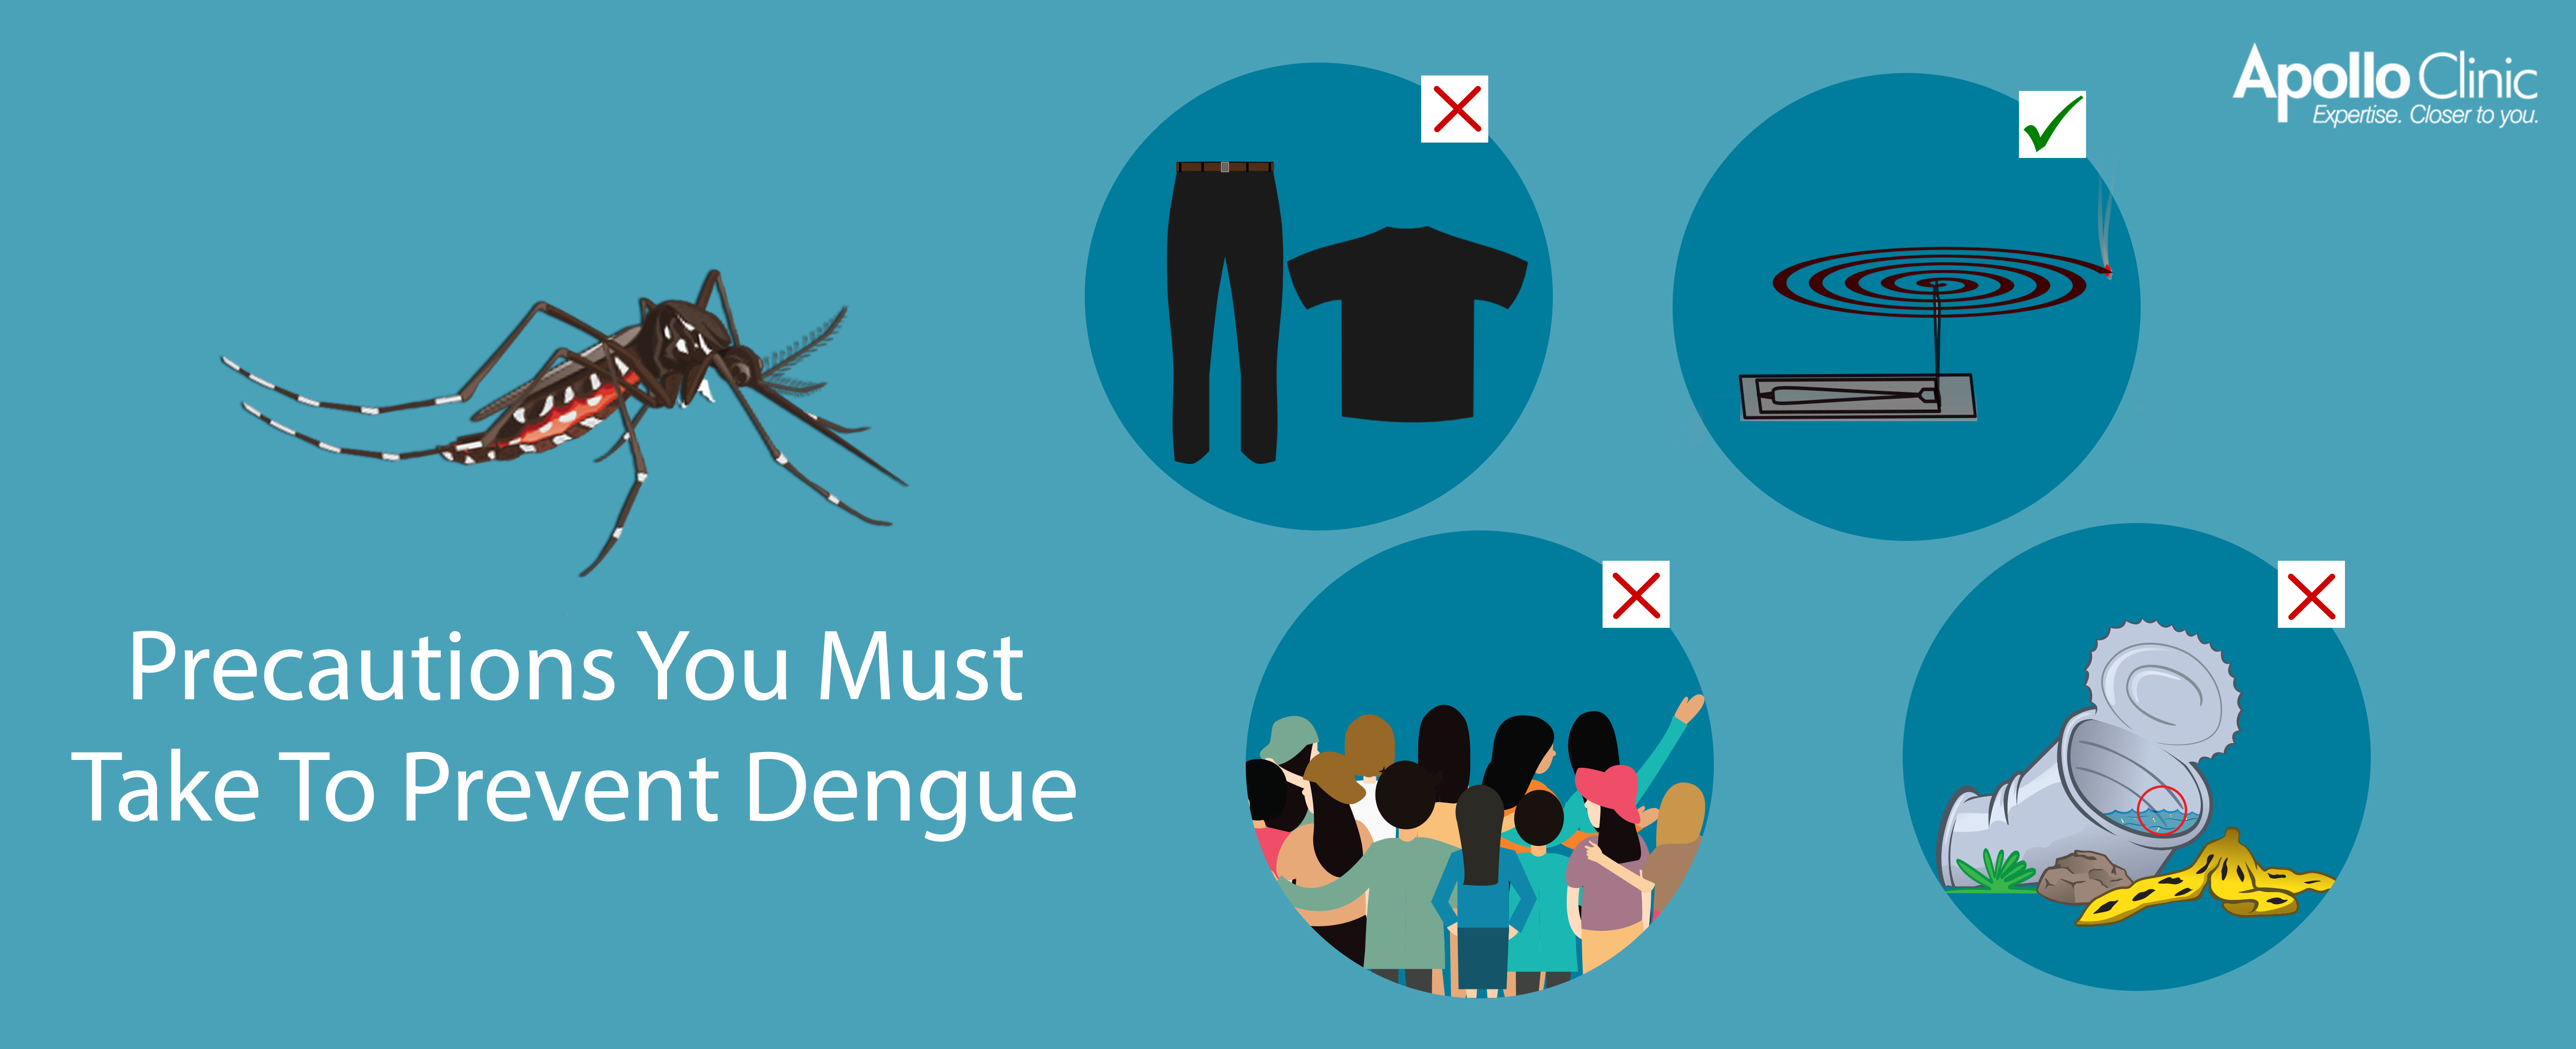 Precautions You Must Take To Prevent Dengue Apollo Clinic Blog